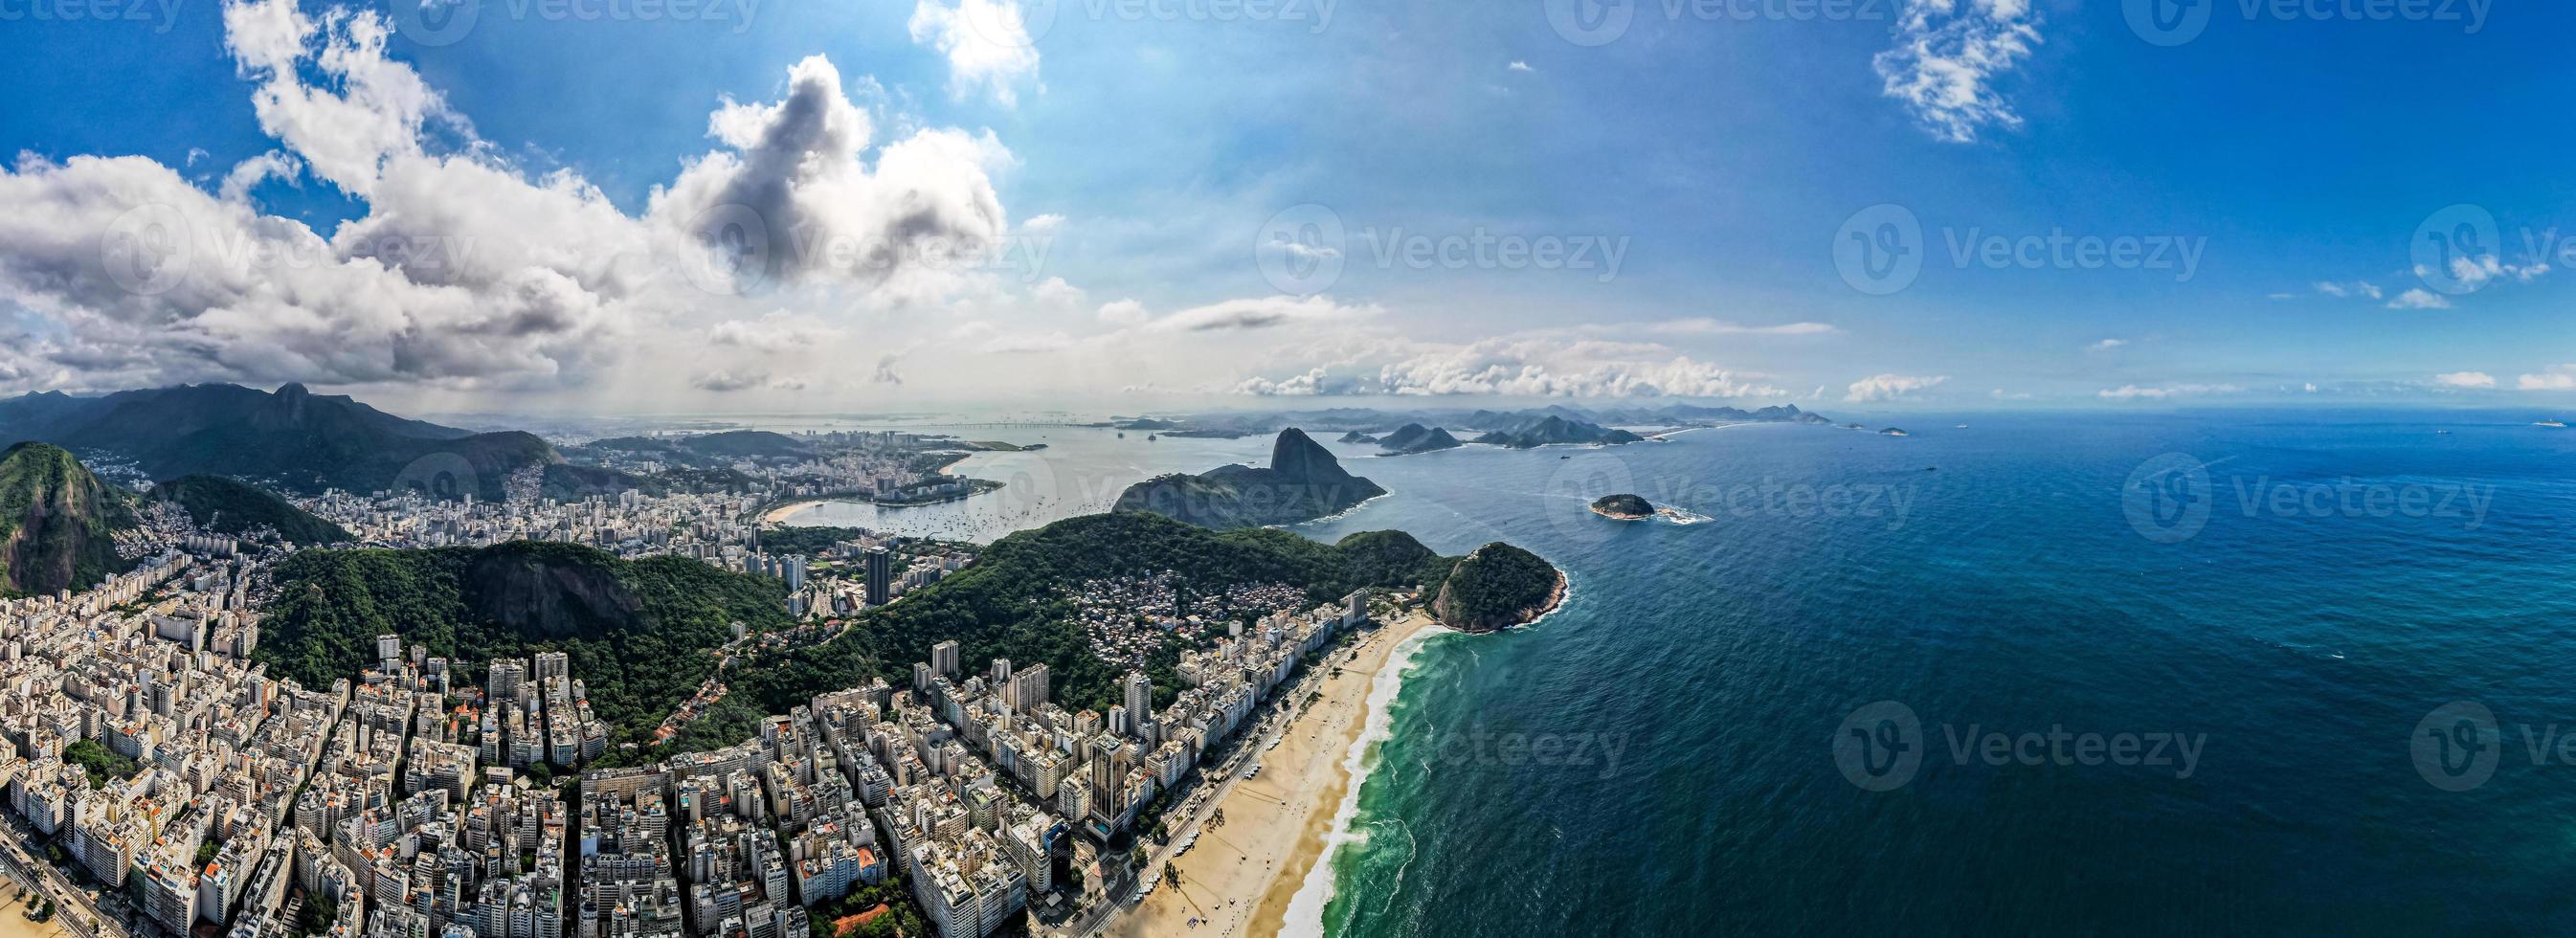 Copacabana-strand, Rio de Janeiro, Brazilië. zomer reisbestemmingen. luchtfoto. foto